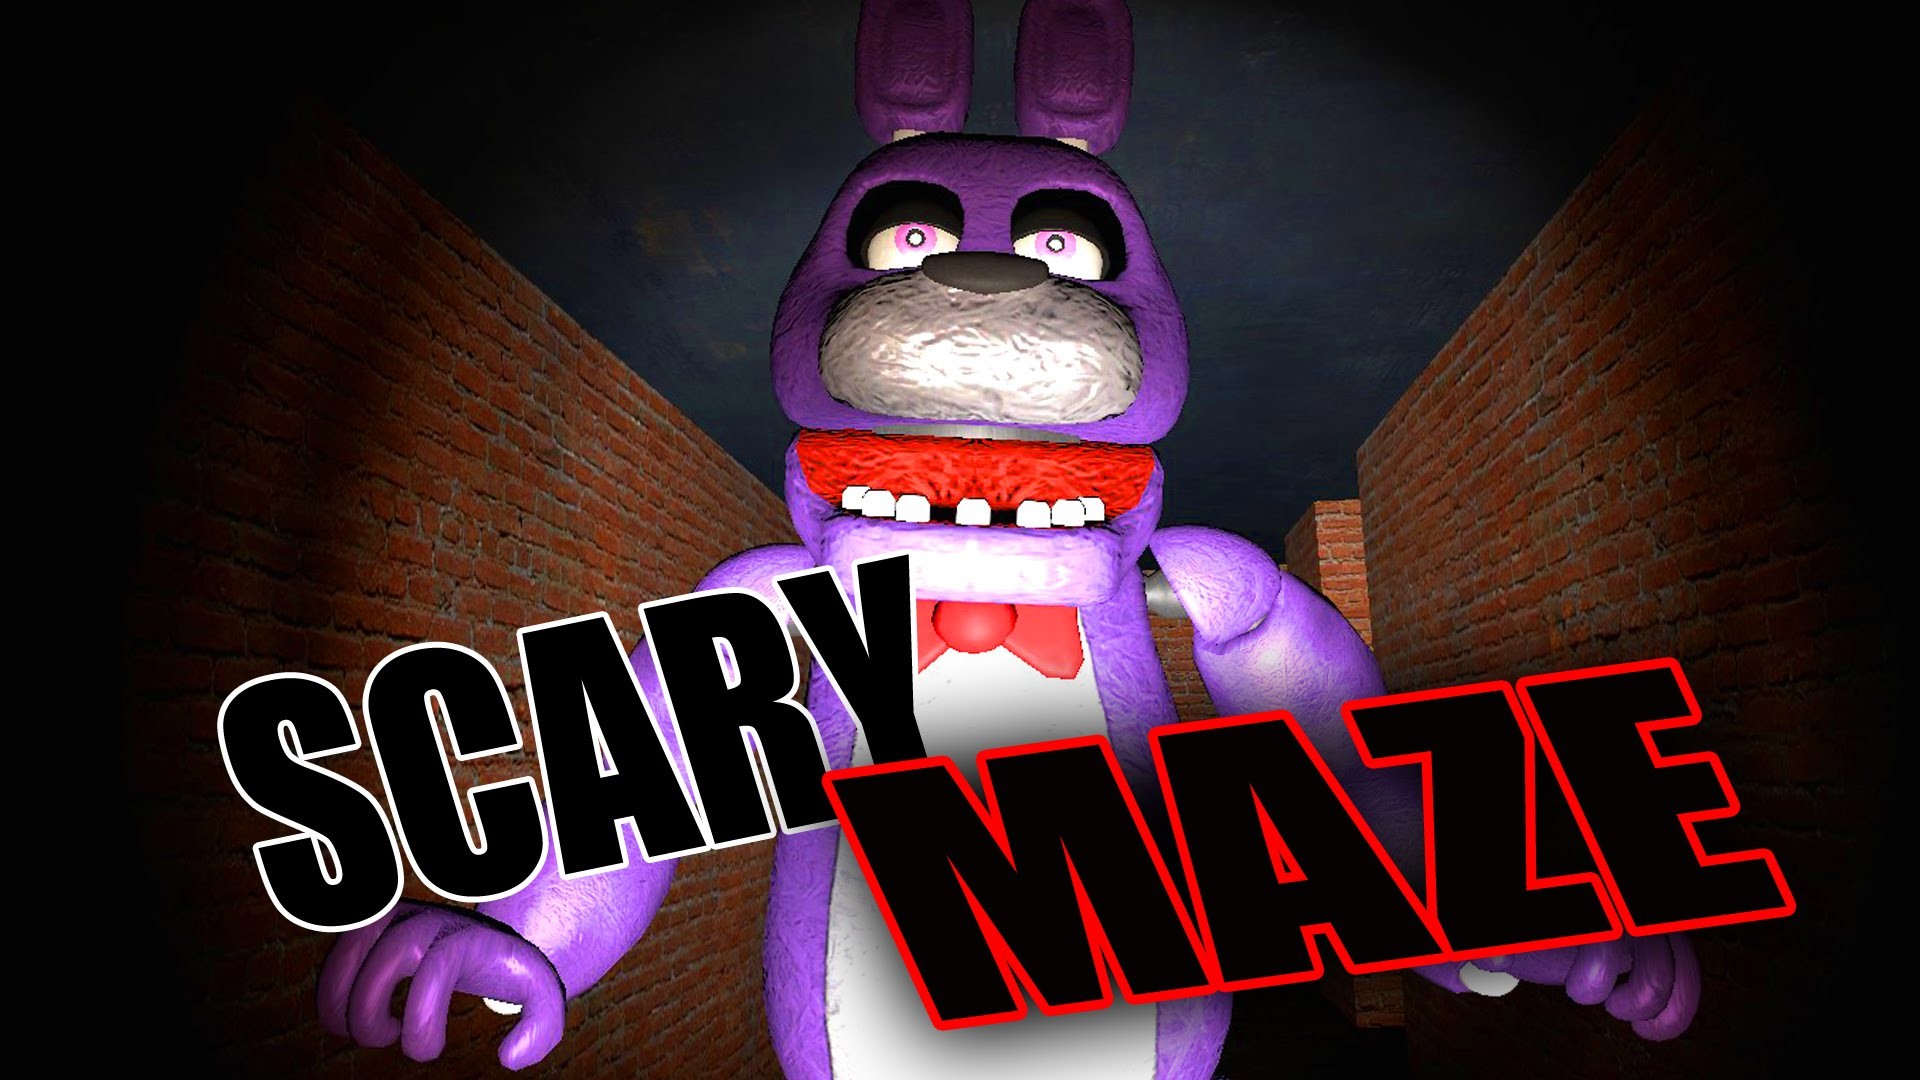 1920x1080 Gmod Five Nights At Freddy's Scary Maze (Garry's Mod) - YouTube